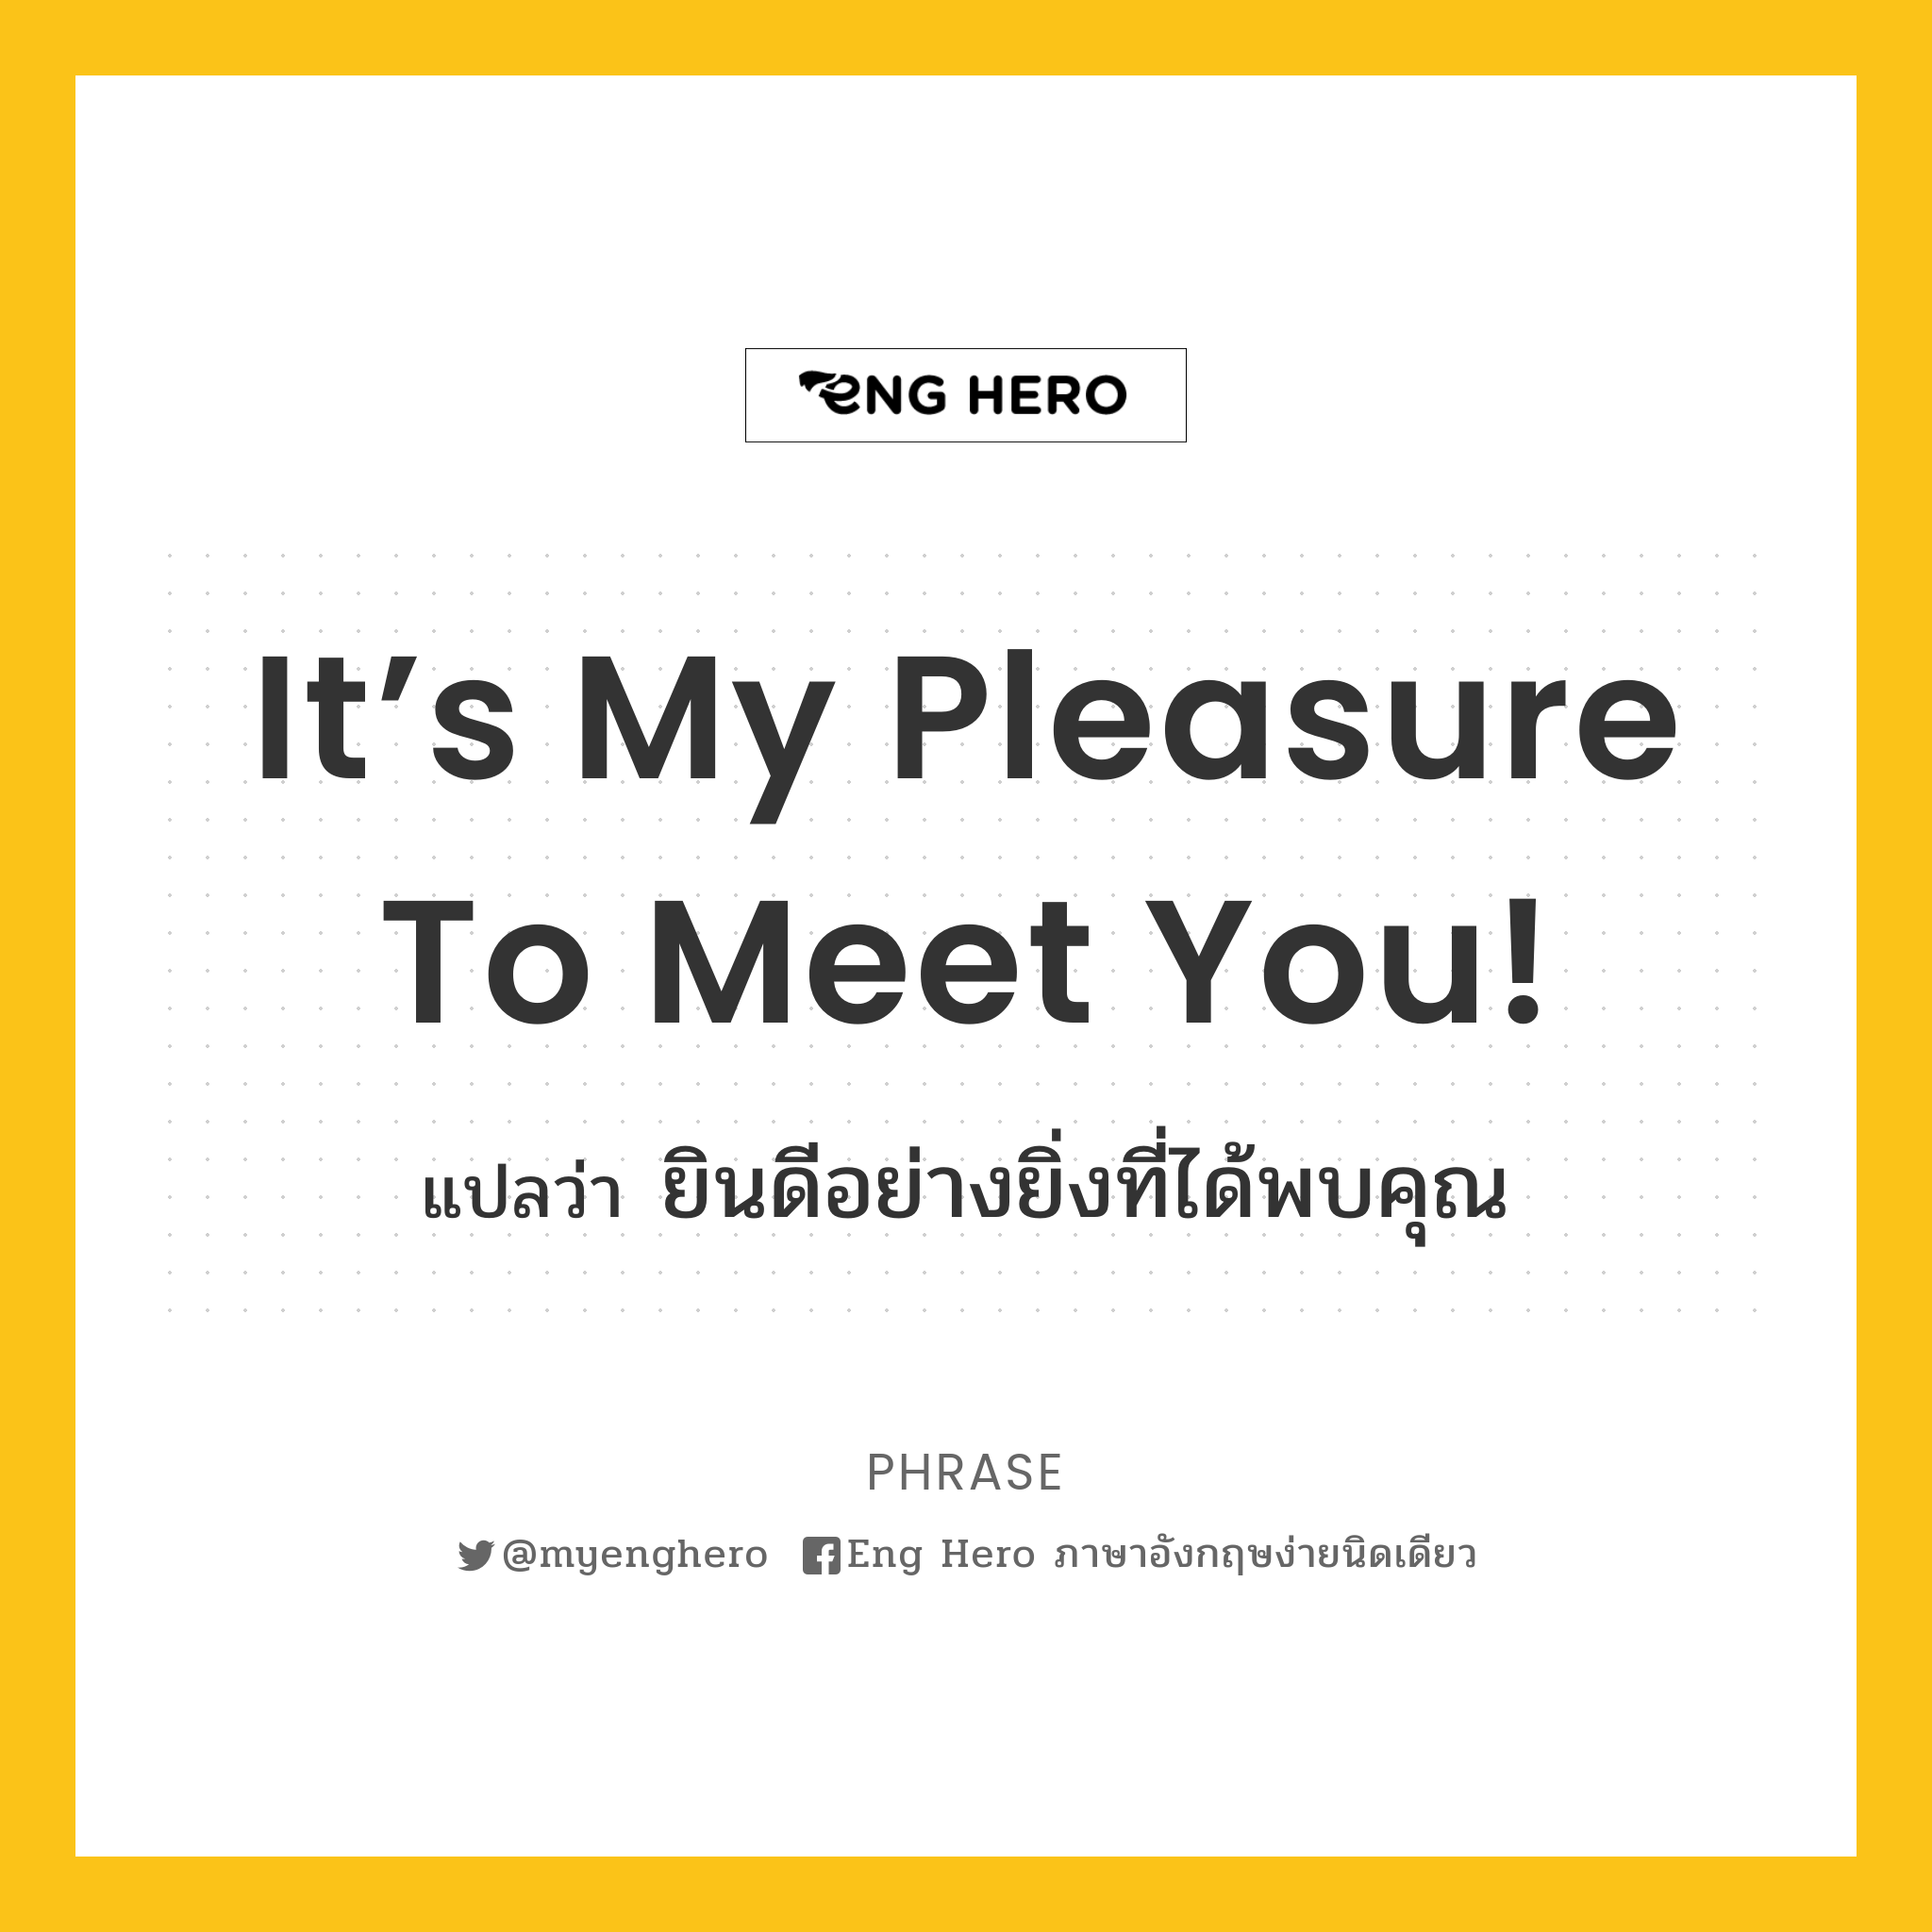 It’s my pleasure to meet you!